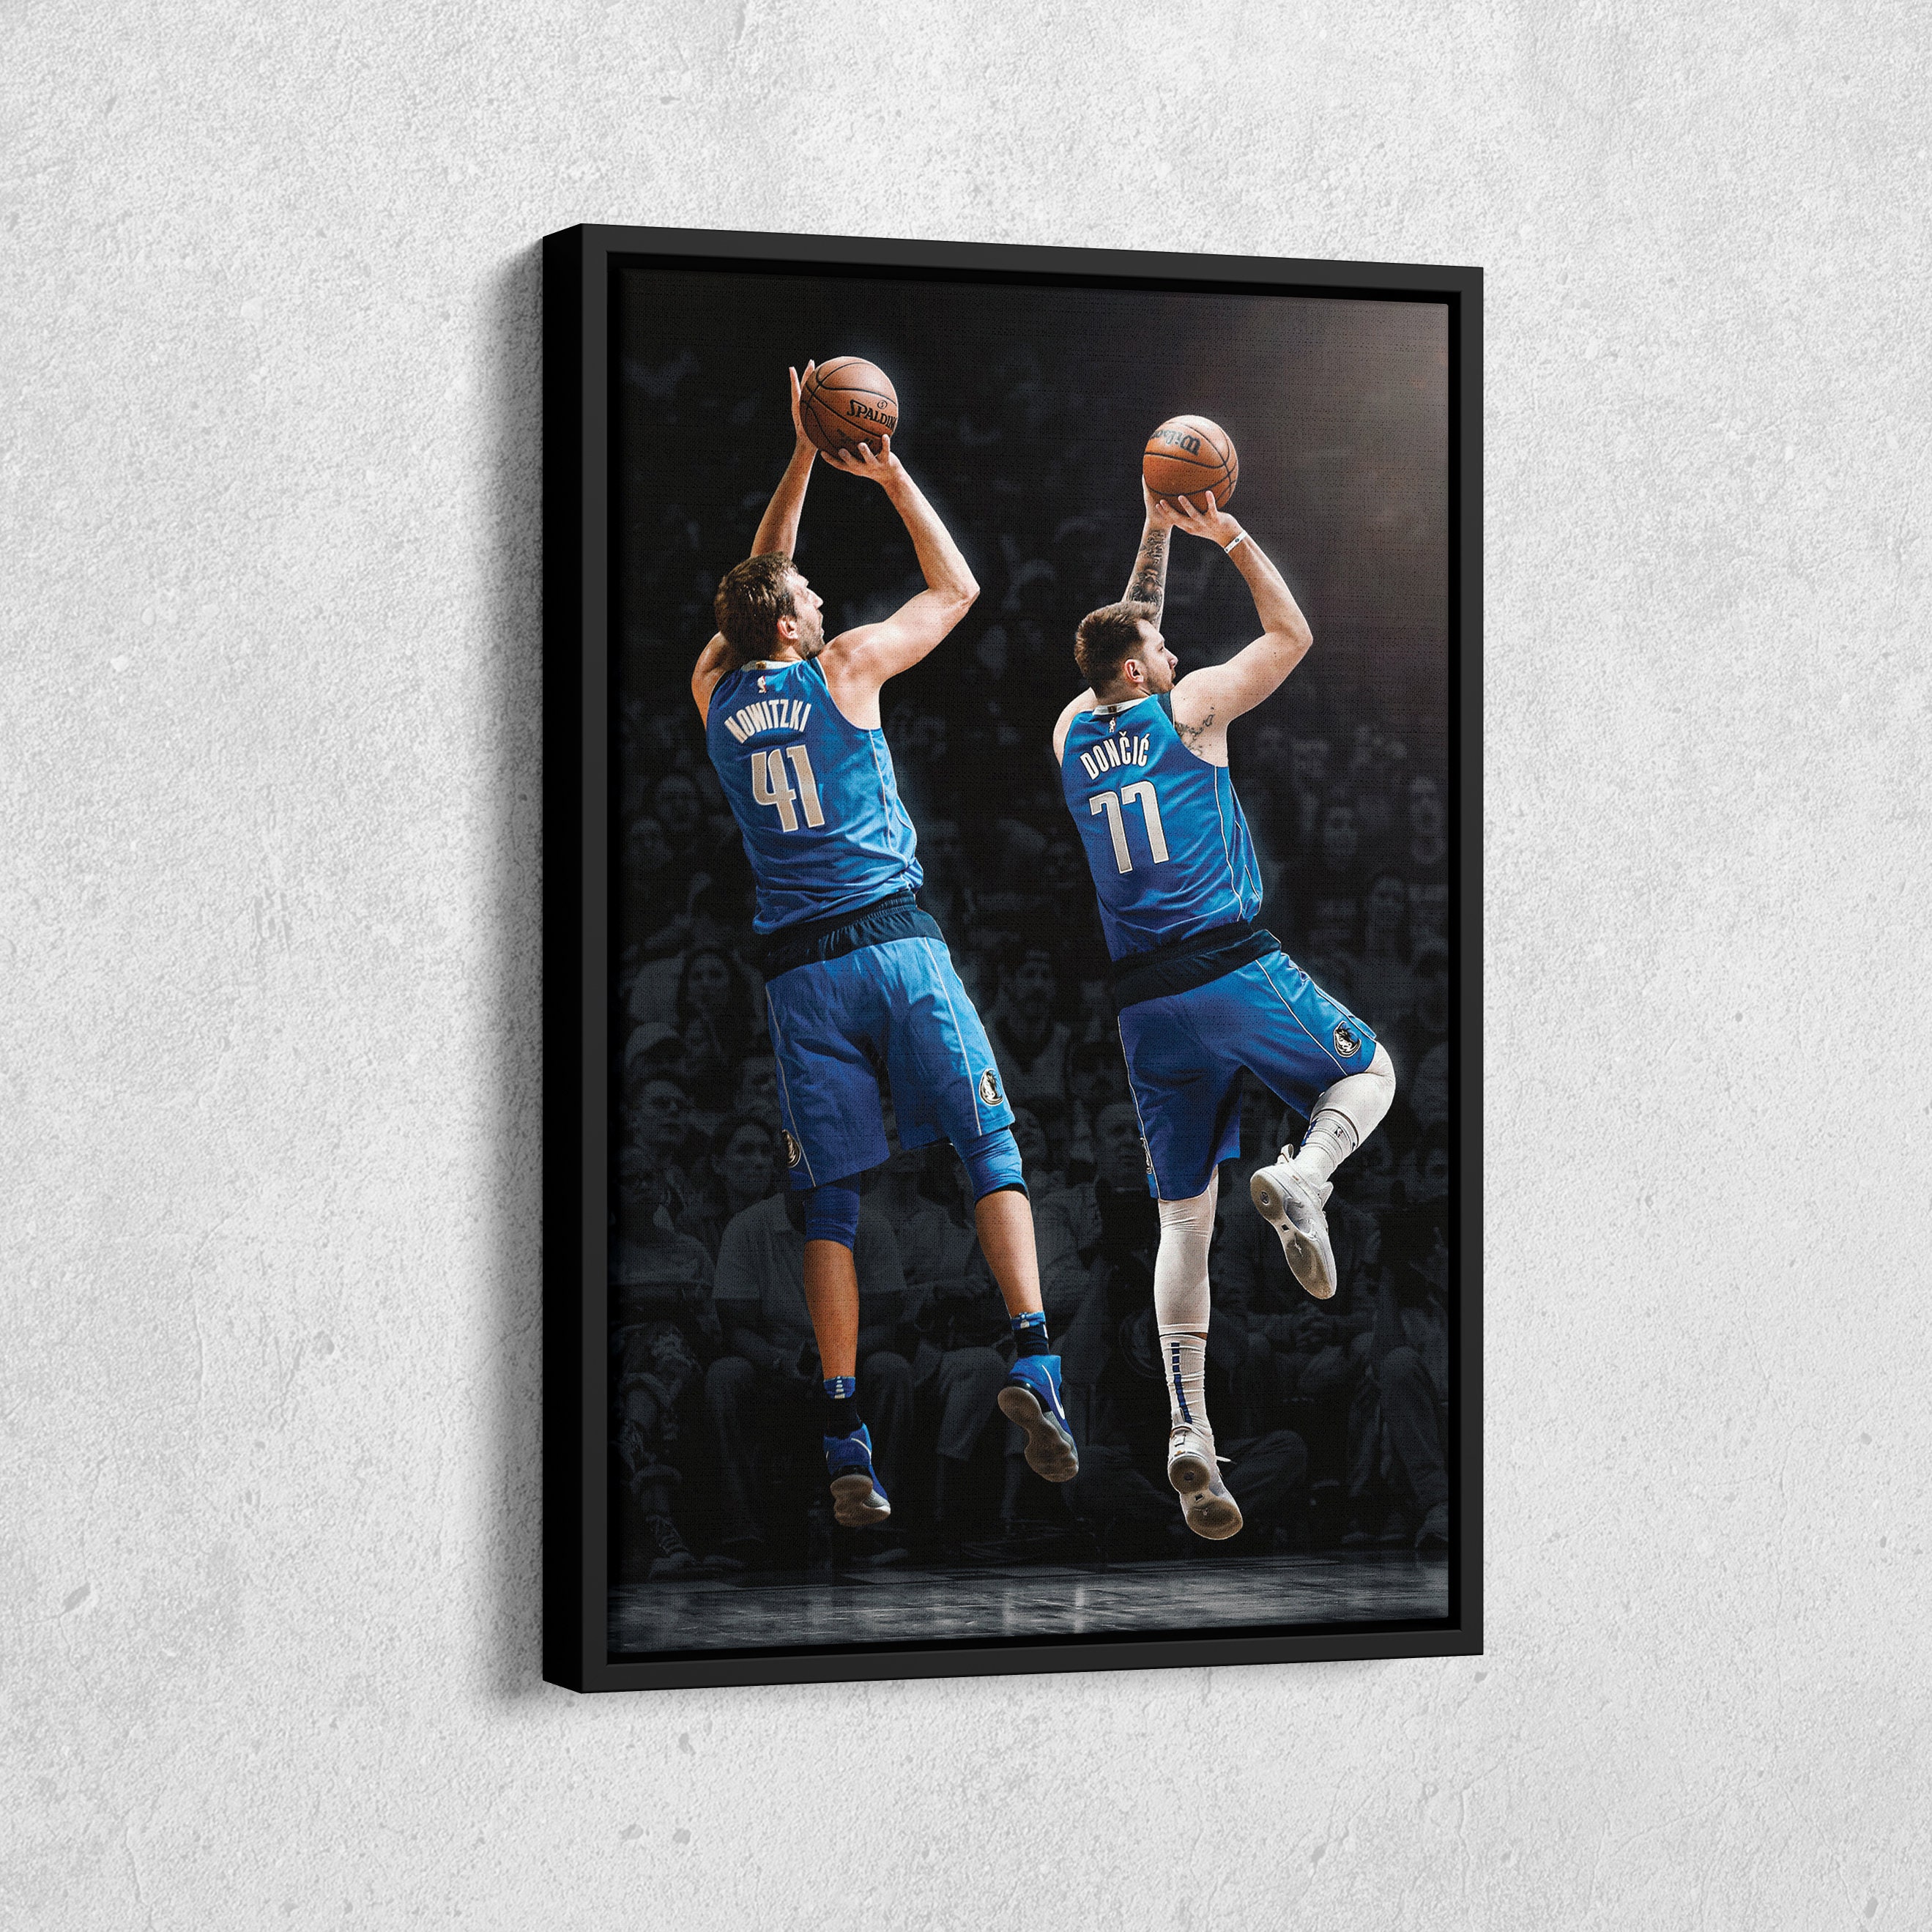 Dallas Mavericks Nike Dri Fit NBA Authentic Replica Luka Dončić #77 Retro  Game Jersey